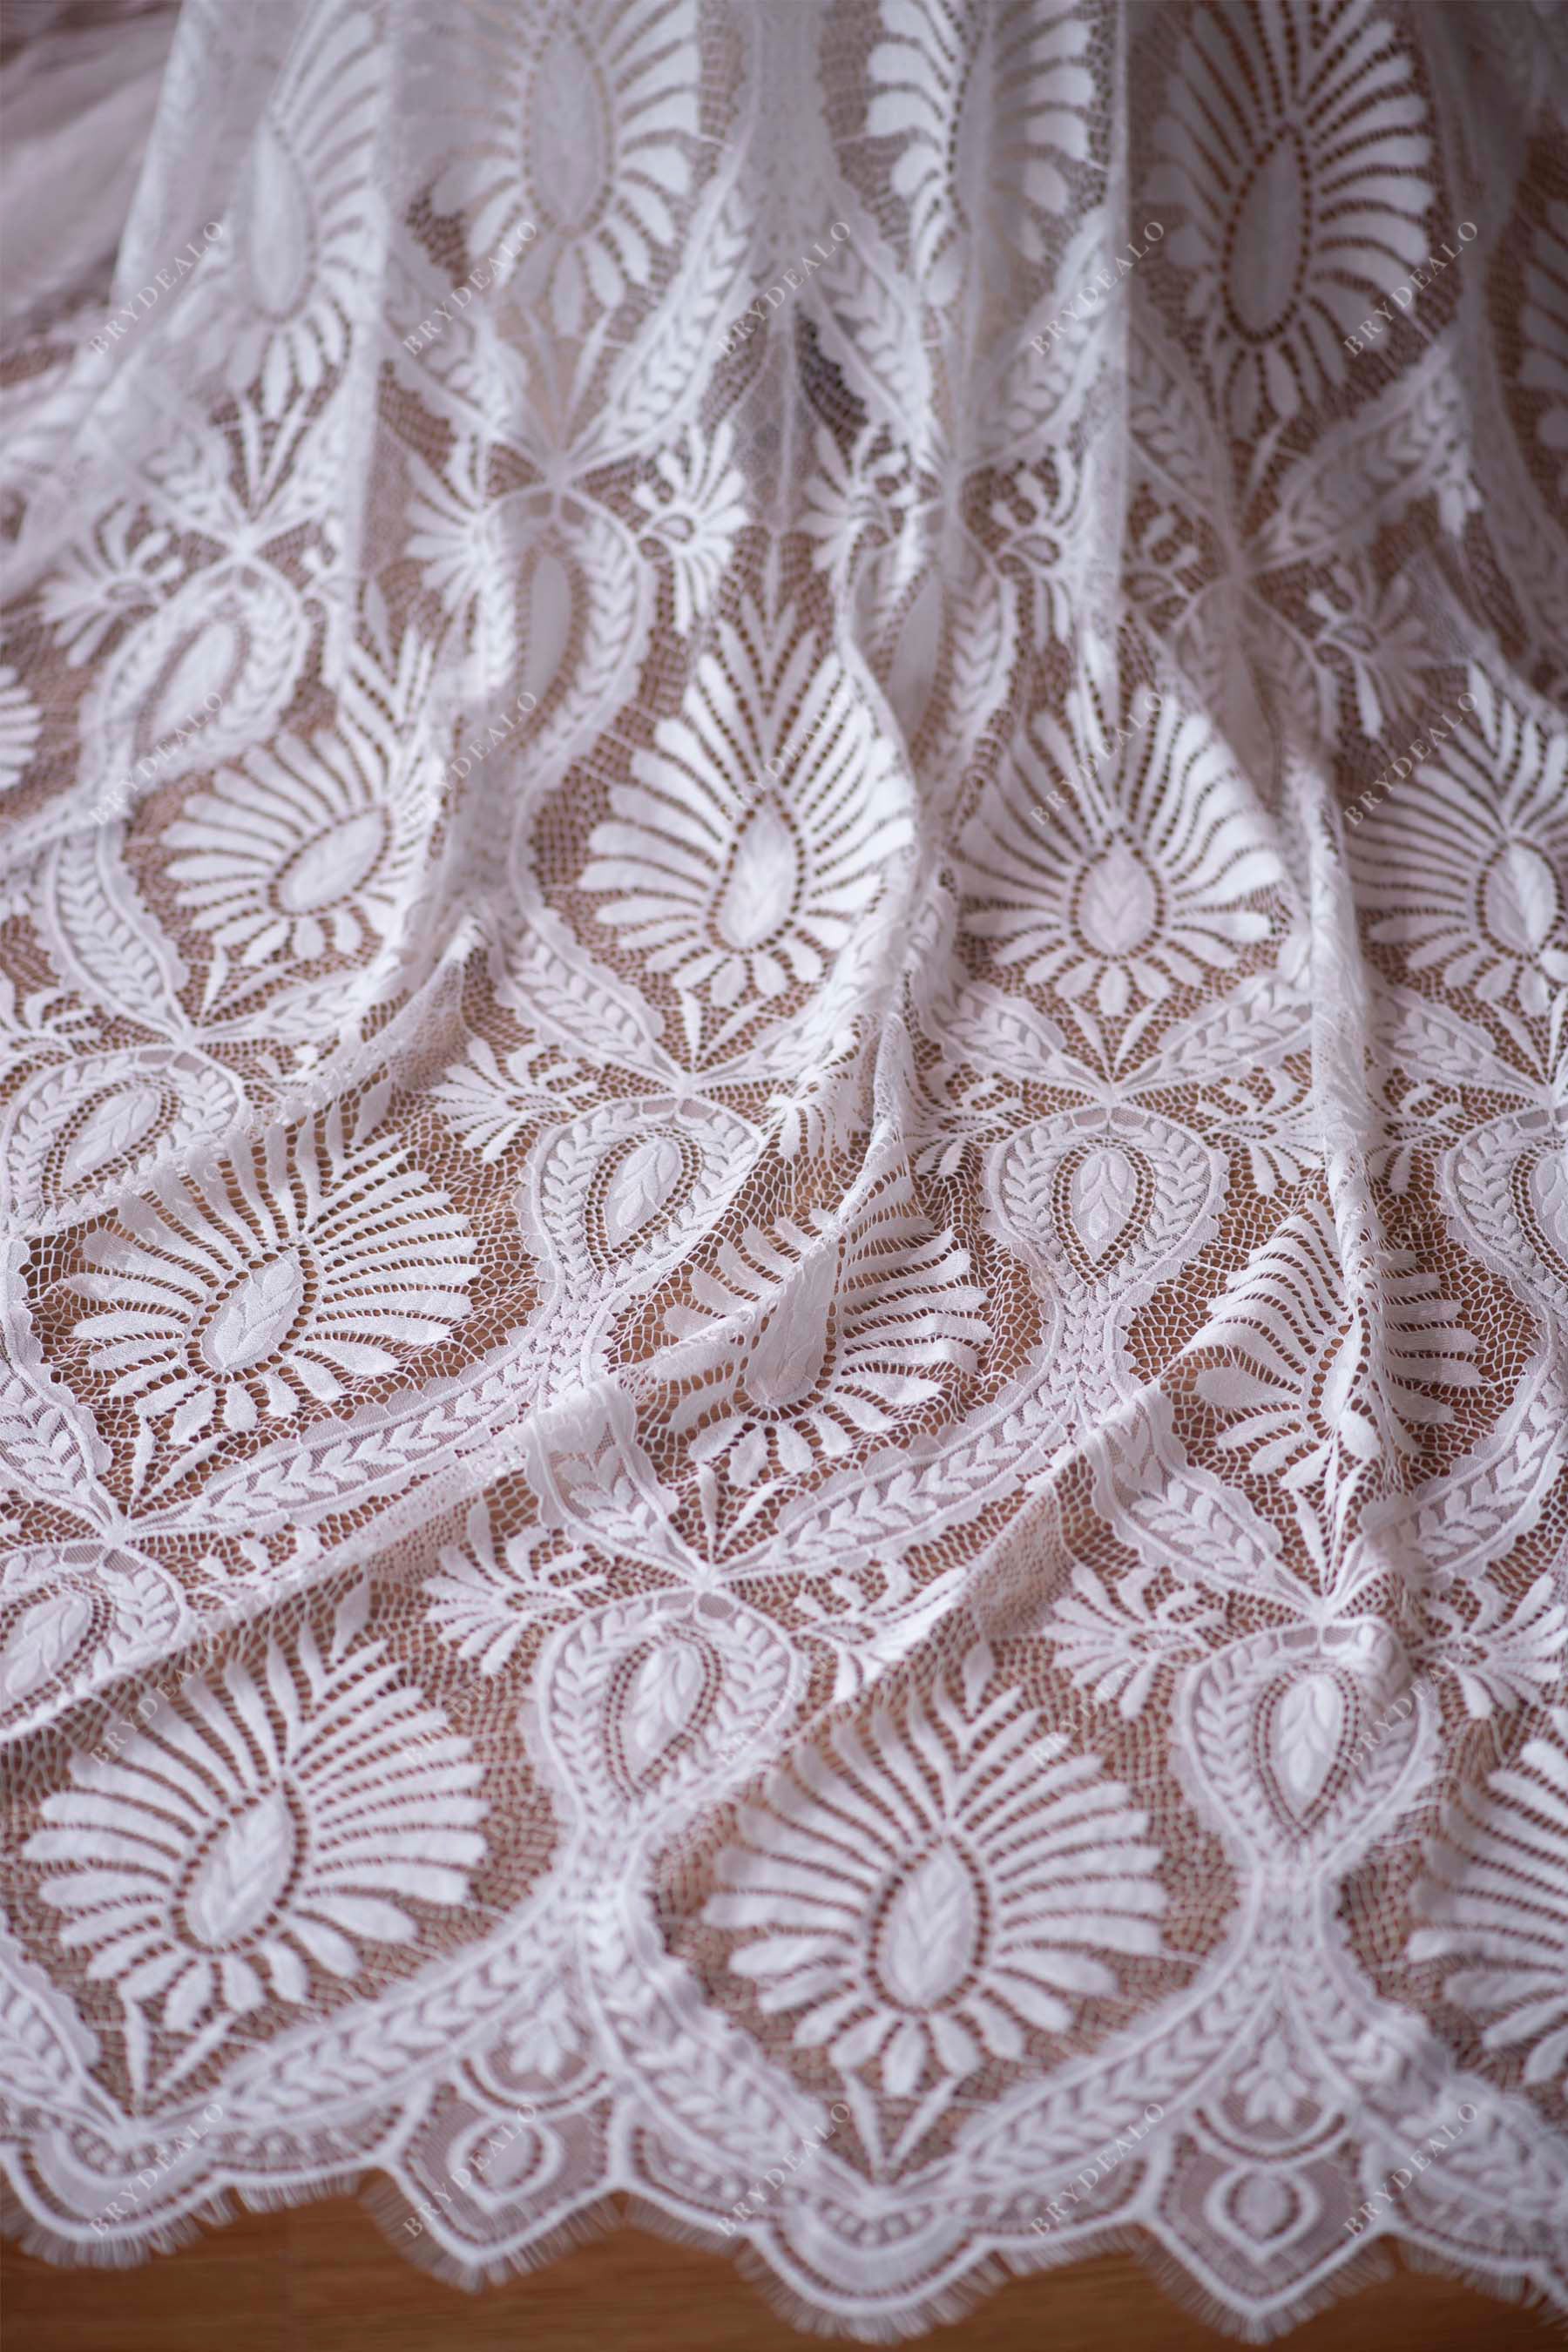 Designer Geometrical Bridal Lace Fabric By The Yard